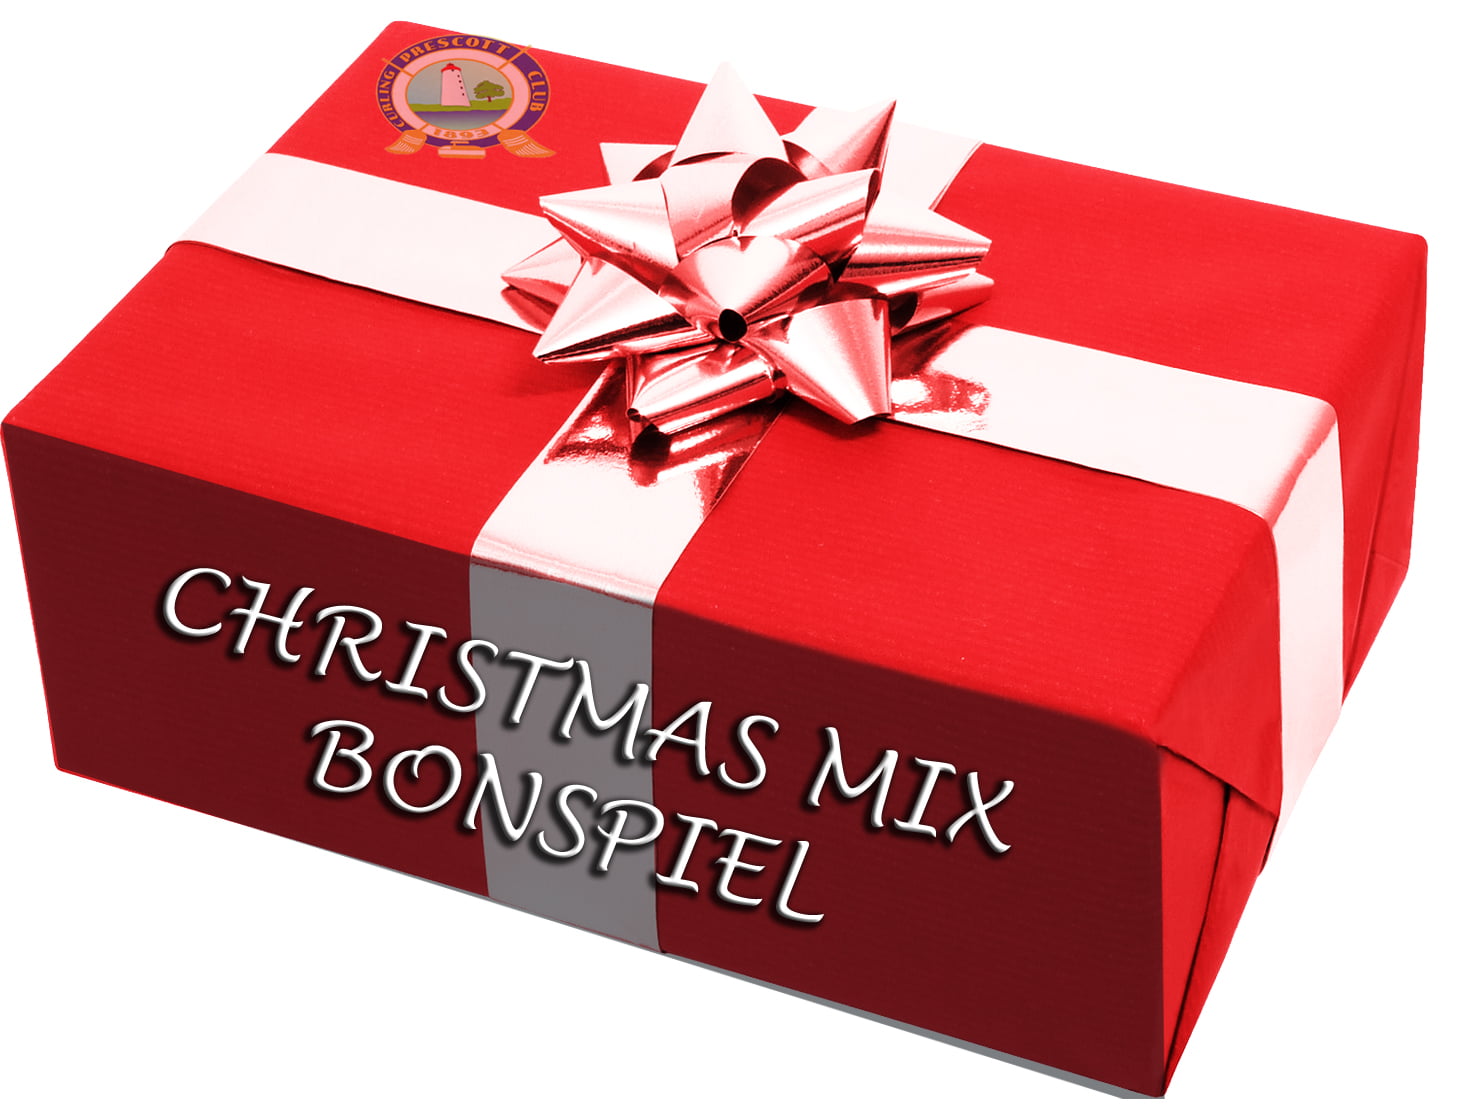 Christmas Mix Bonspiel